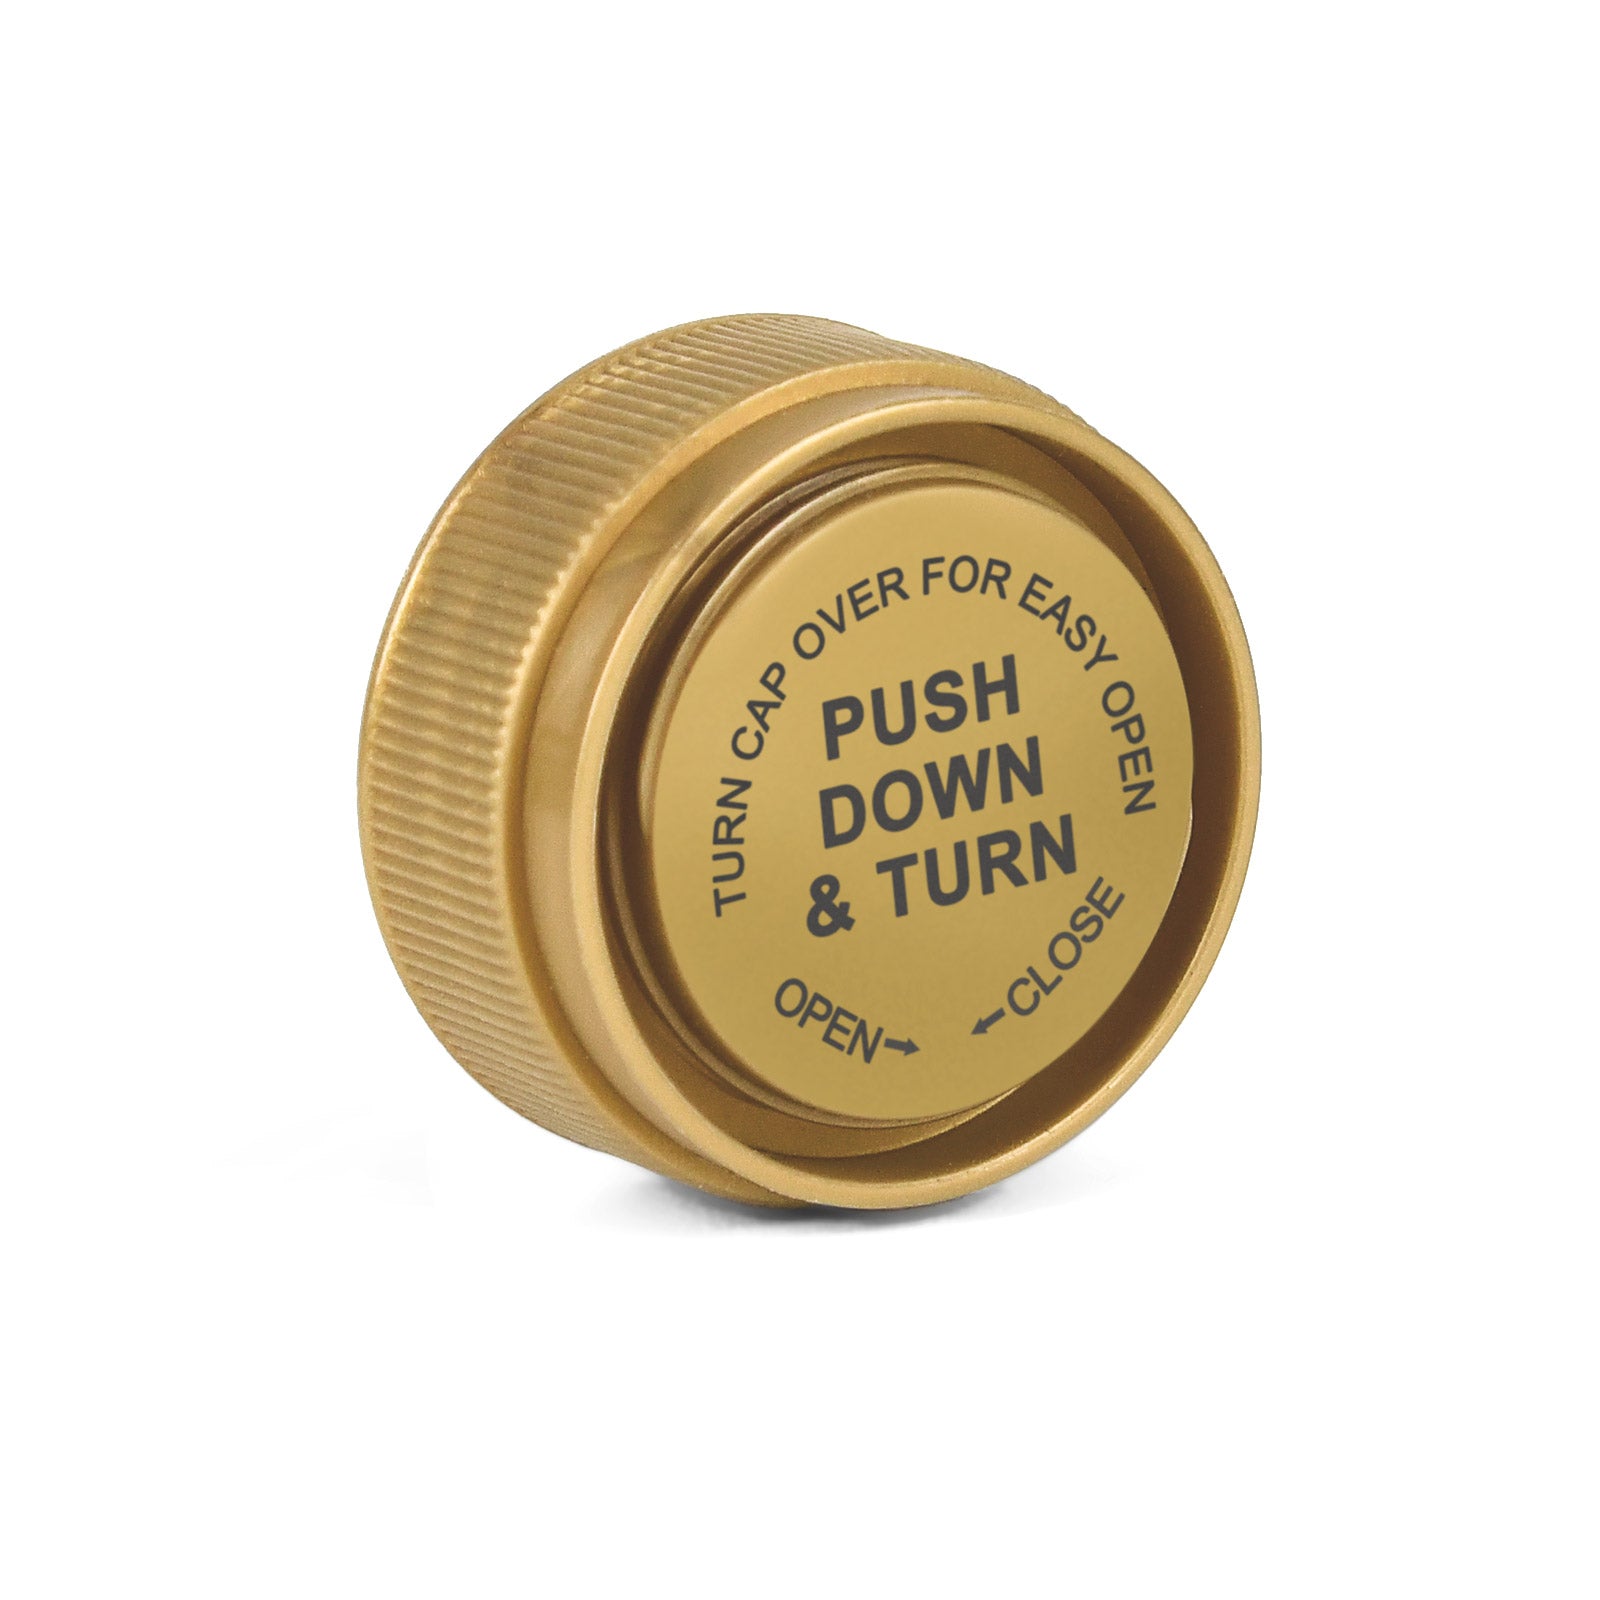 8 Dram Reversible Cap Opaque Gold - 410 Count